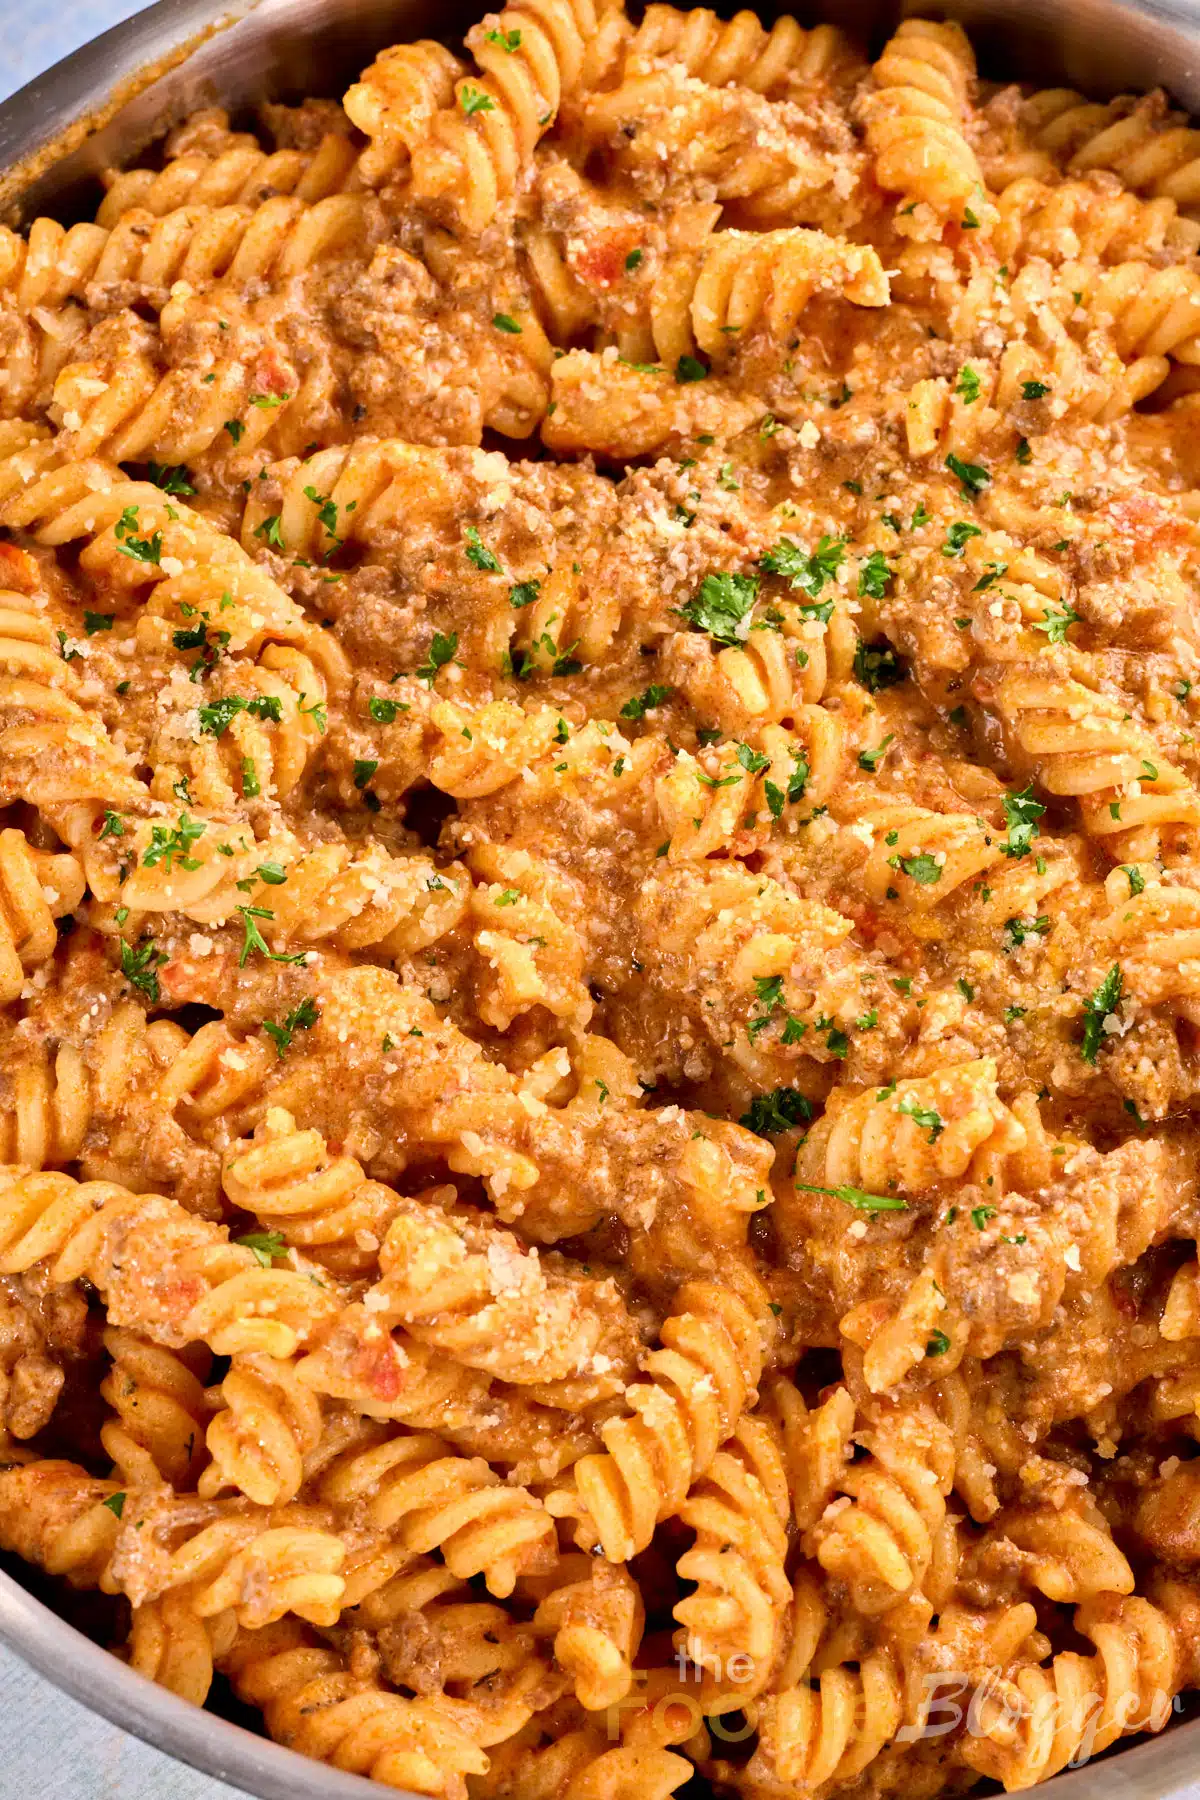 thefoodieblogger beef pasta recipe 3